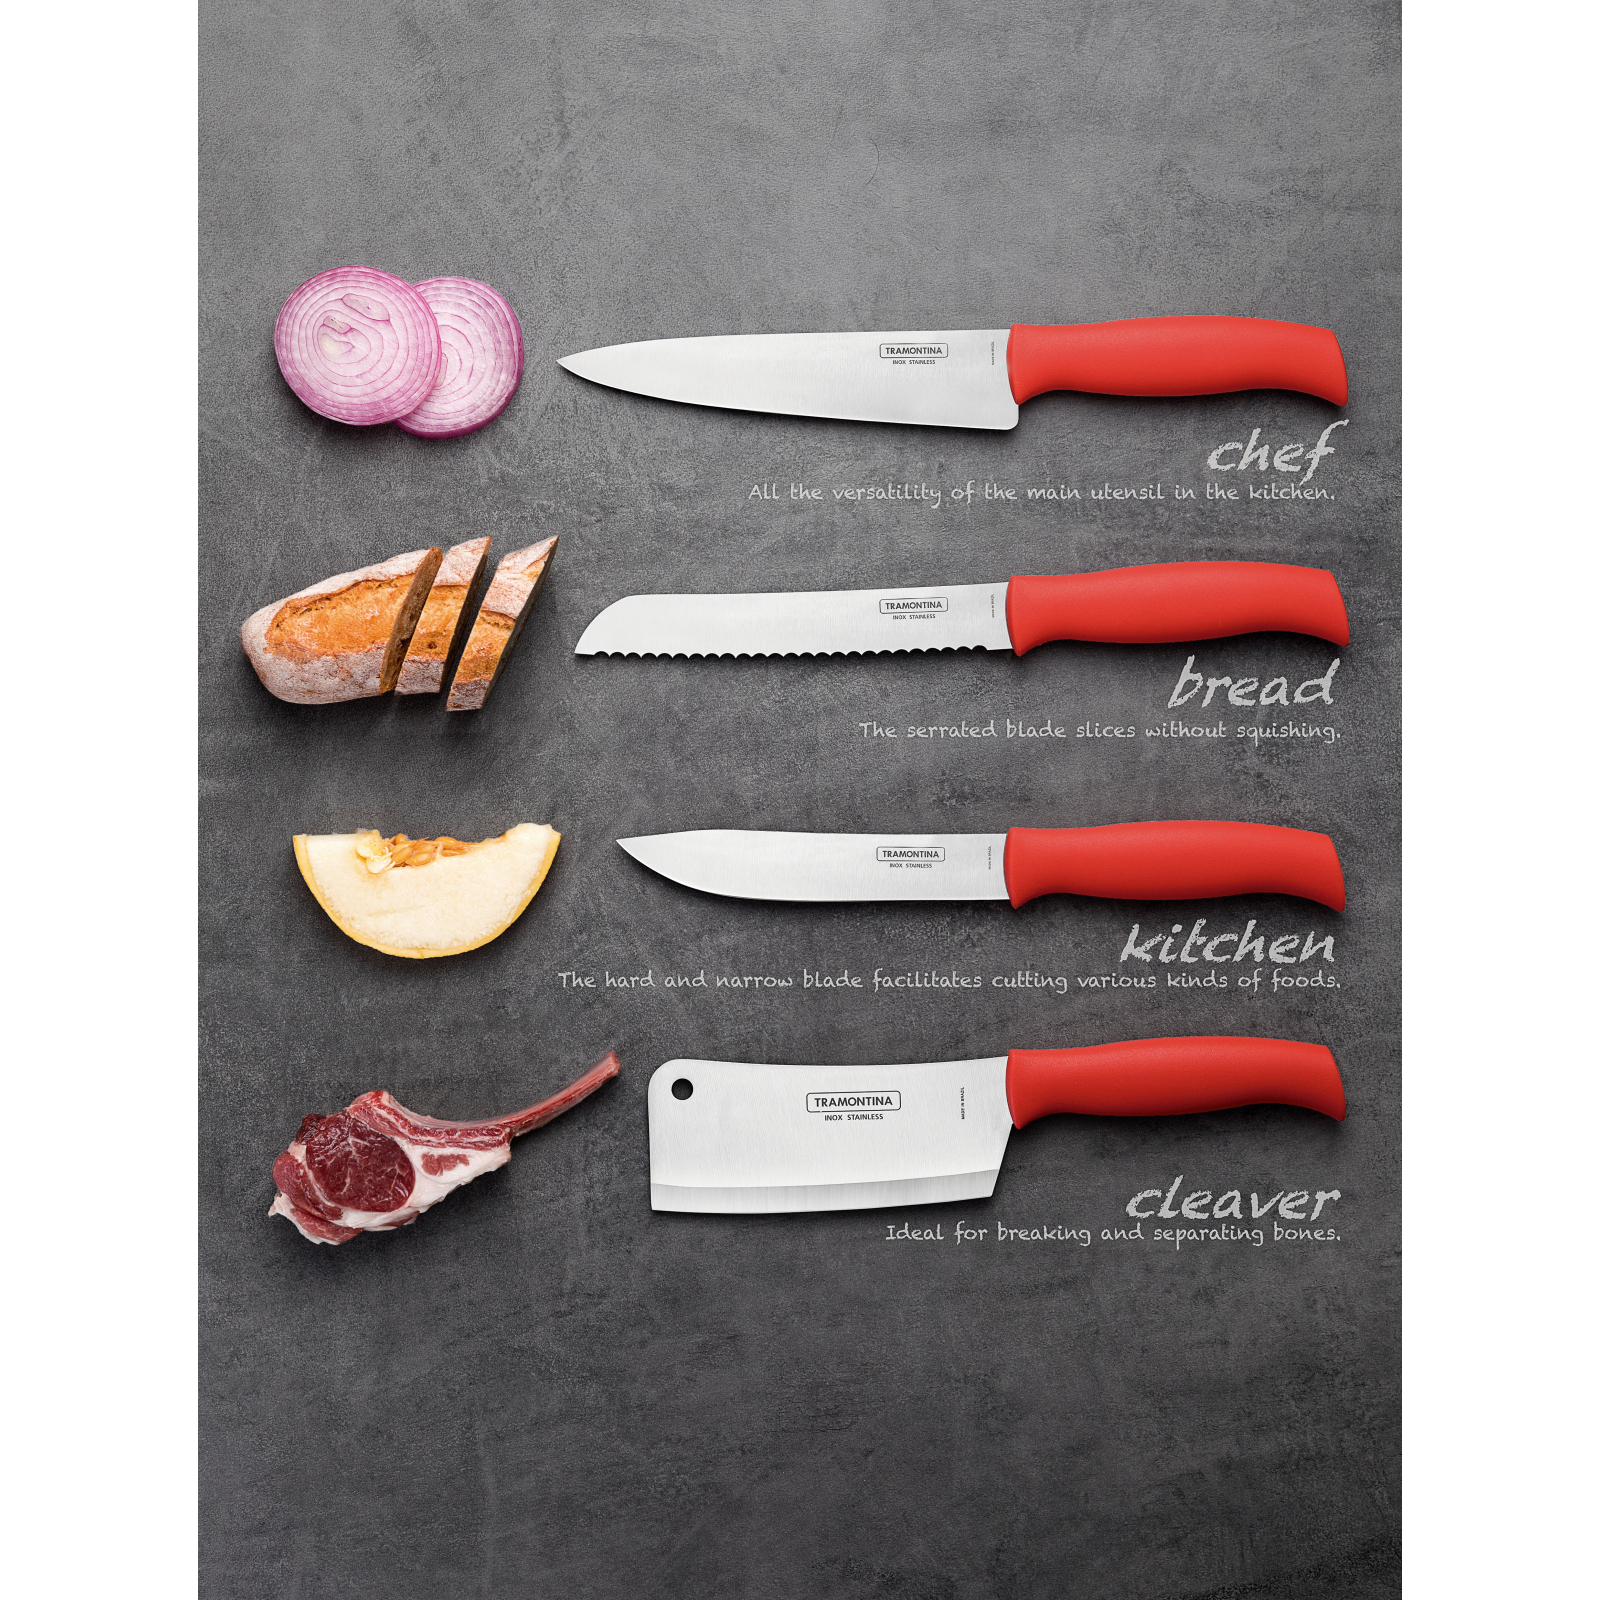 Кухонный нож Tramontina Soft Plus Red Bread 178 мм (23662/177) изображение 4